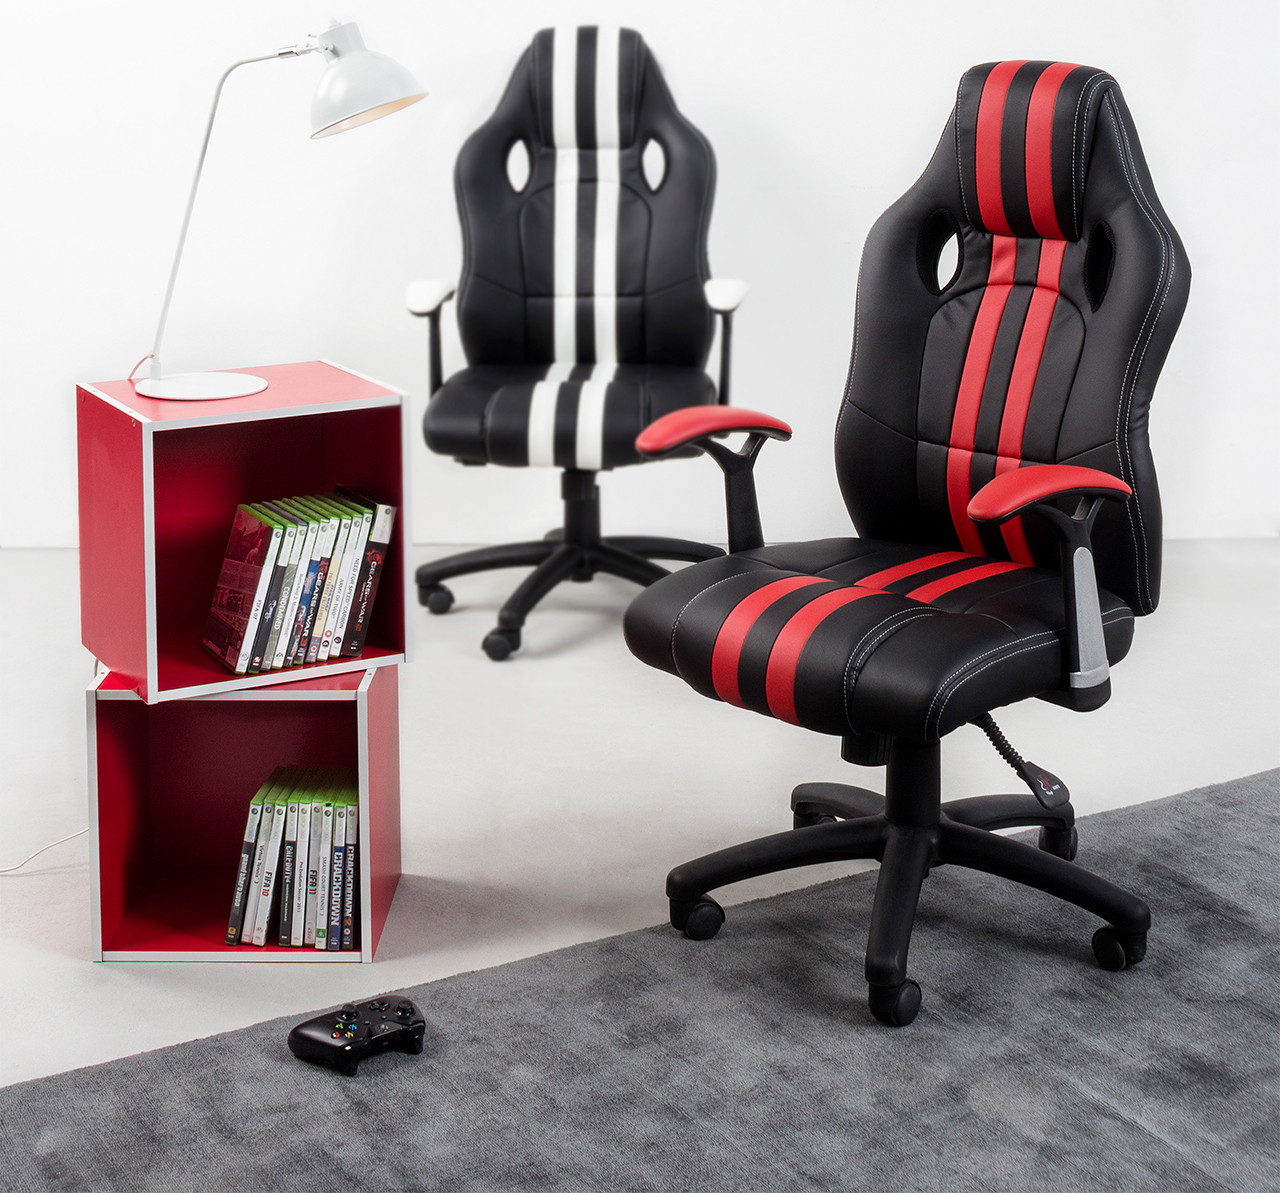 Spider office chair